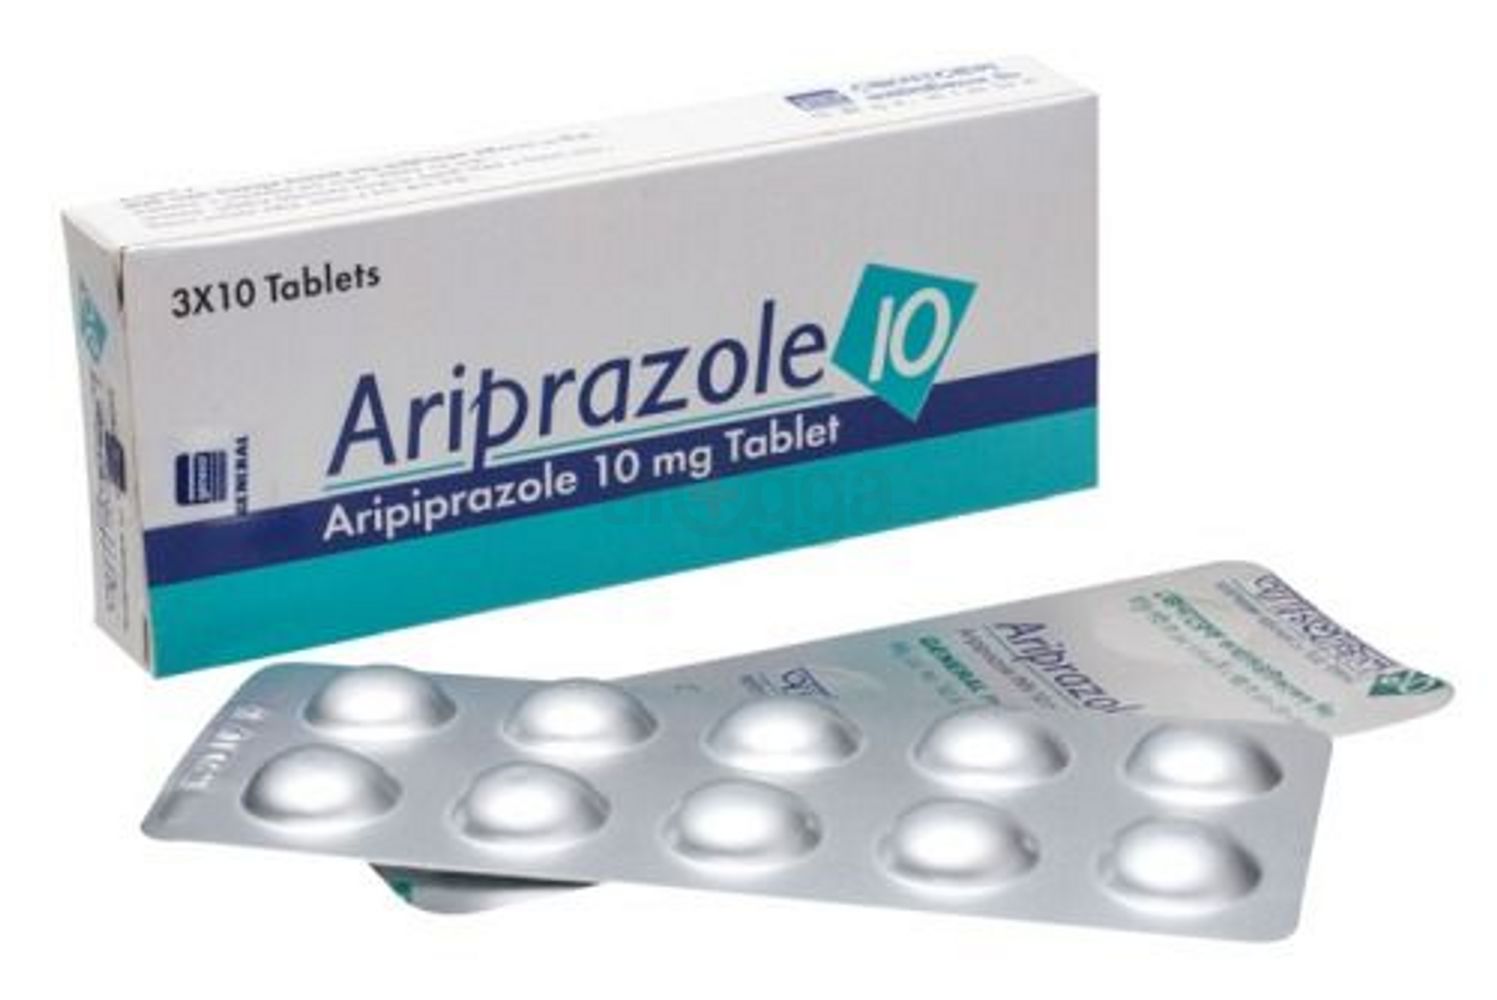 Ariprazole 10